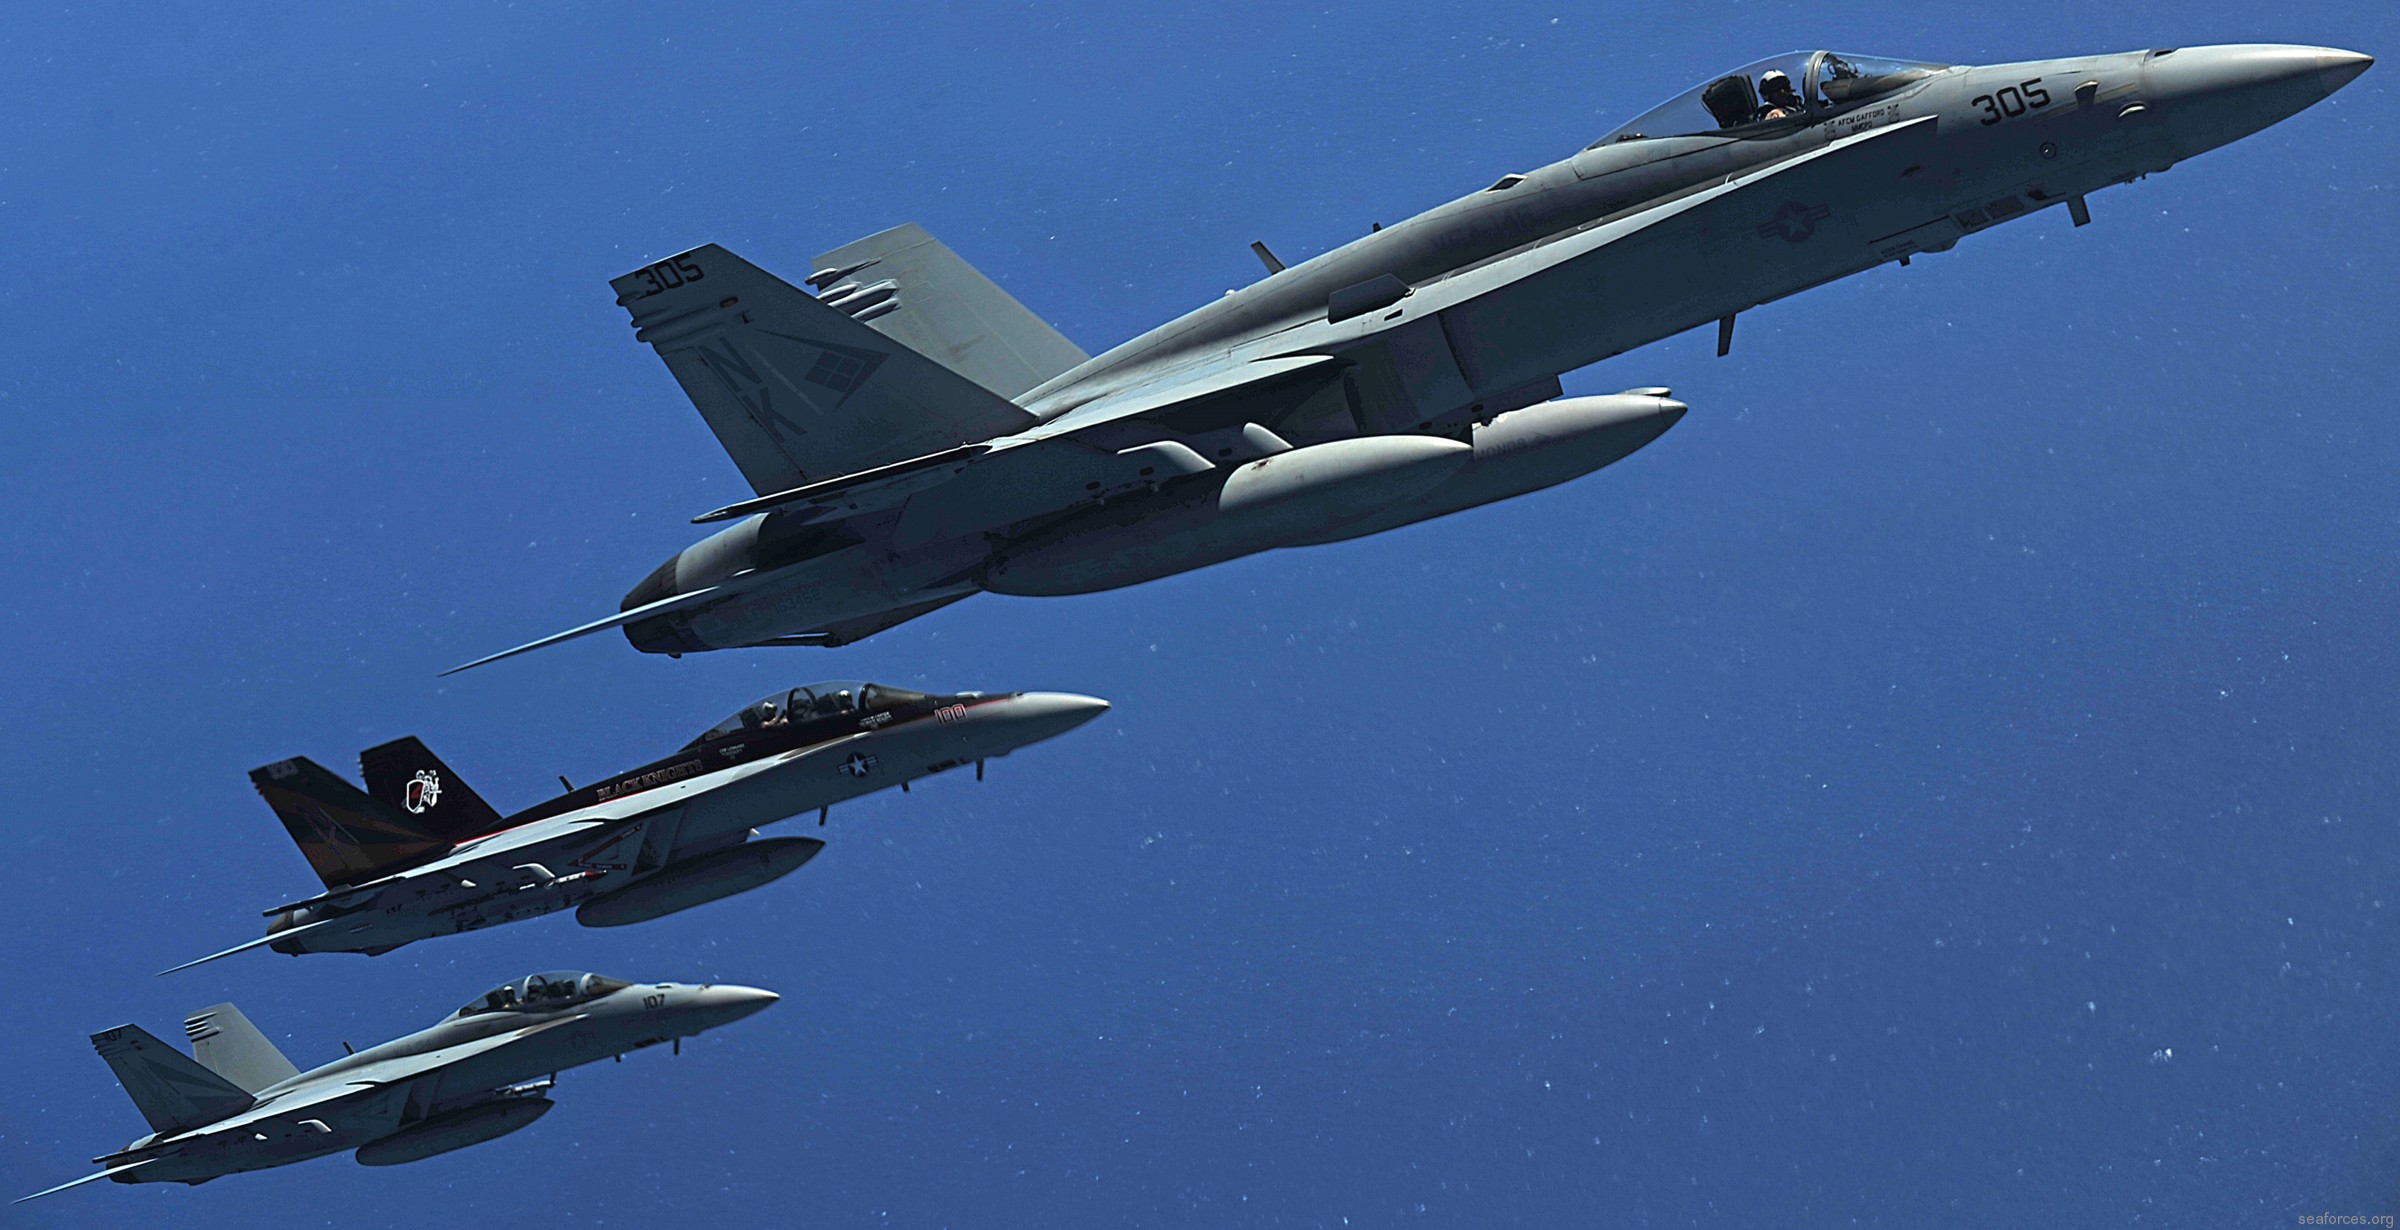 vfa-146 blue diamonds strike fighter squadron f/a-18c hornet carrier air wing cvw-14 uss ronald reagan cvn-76 96